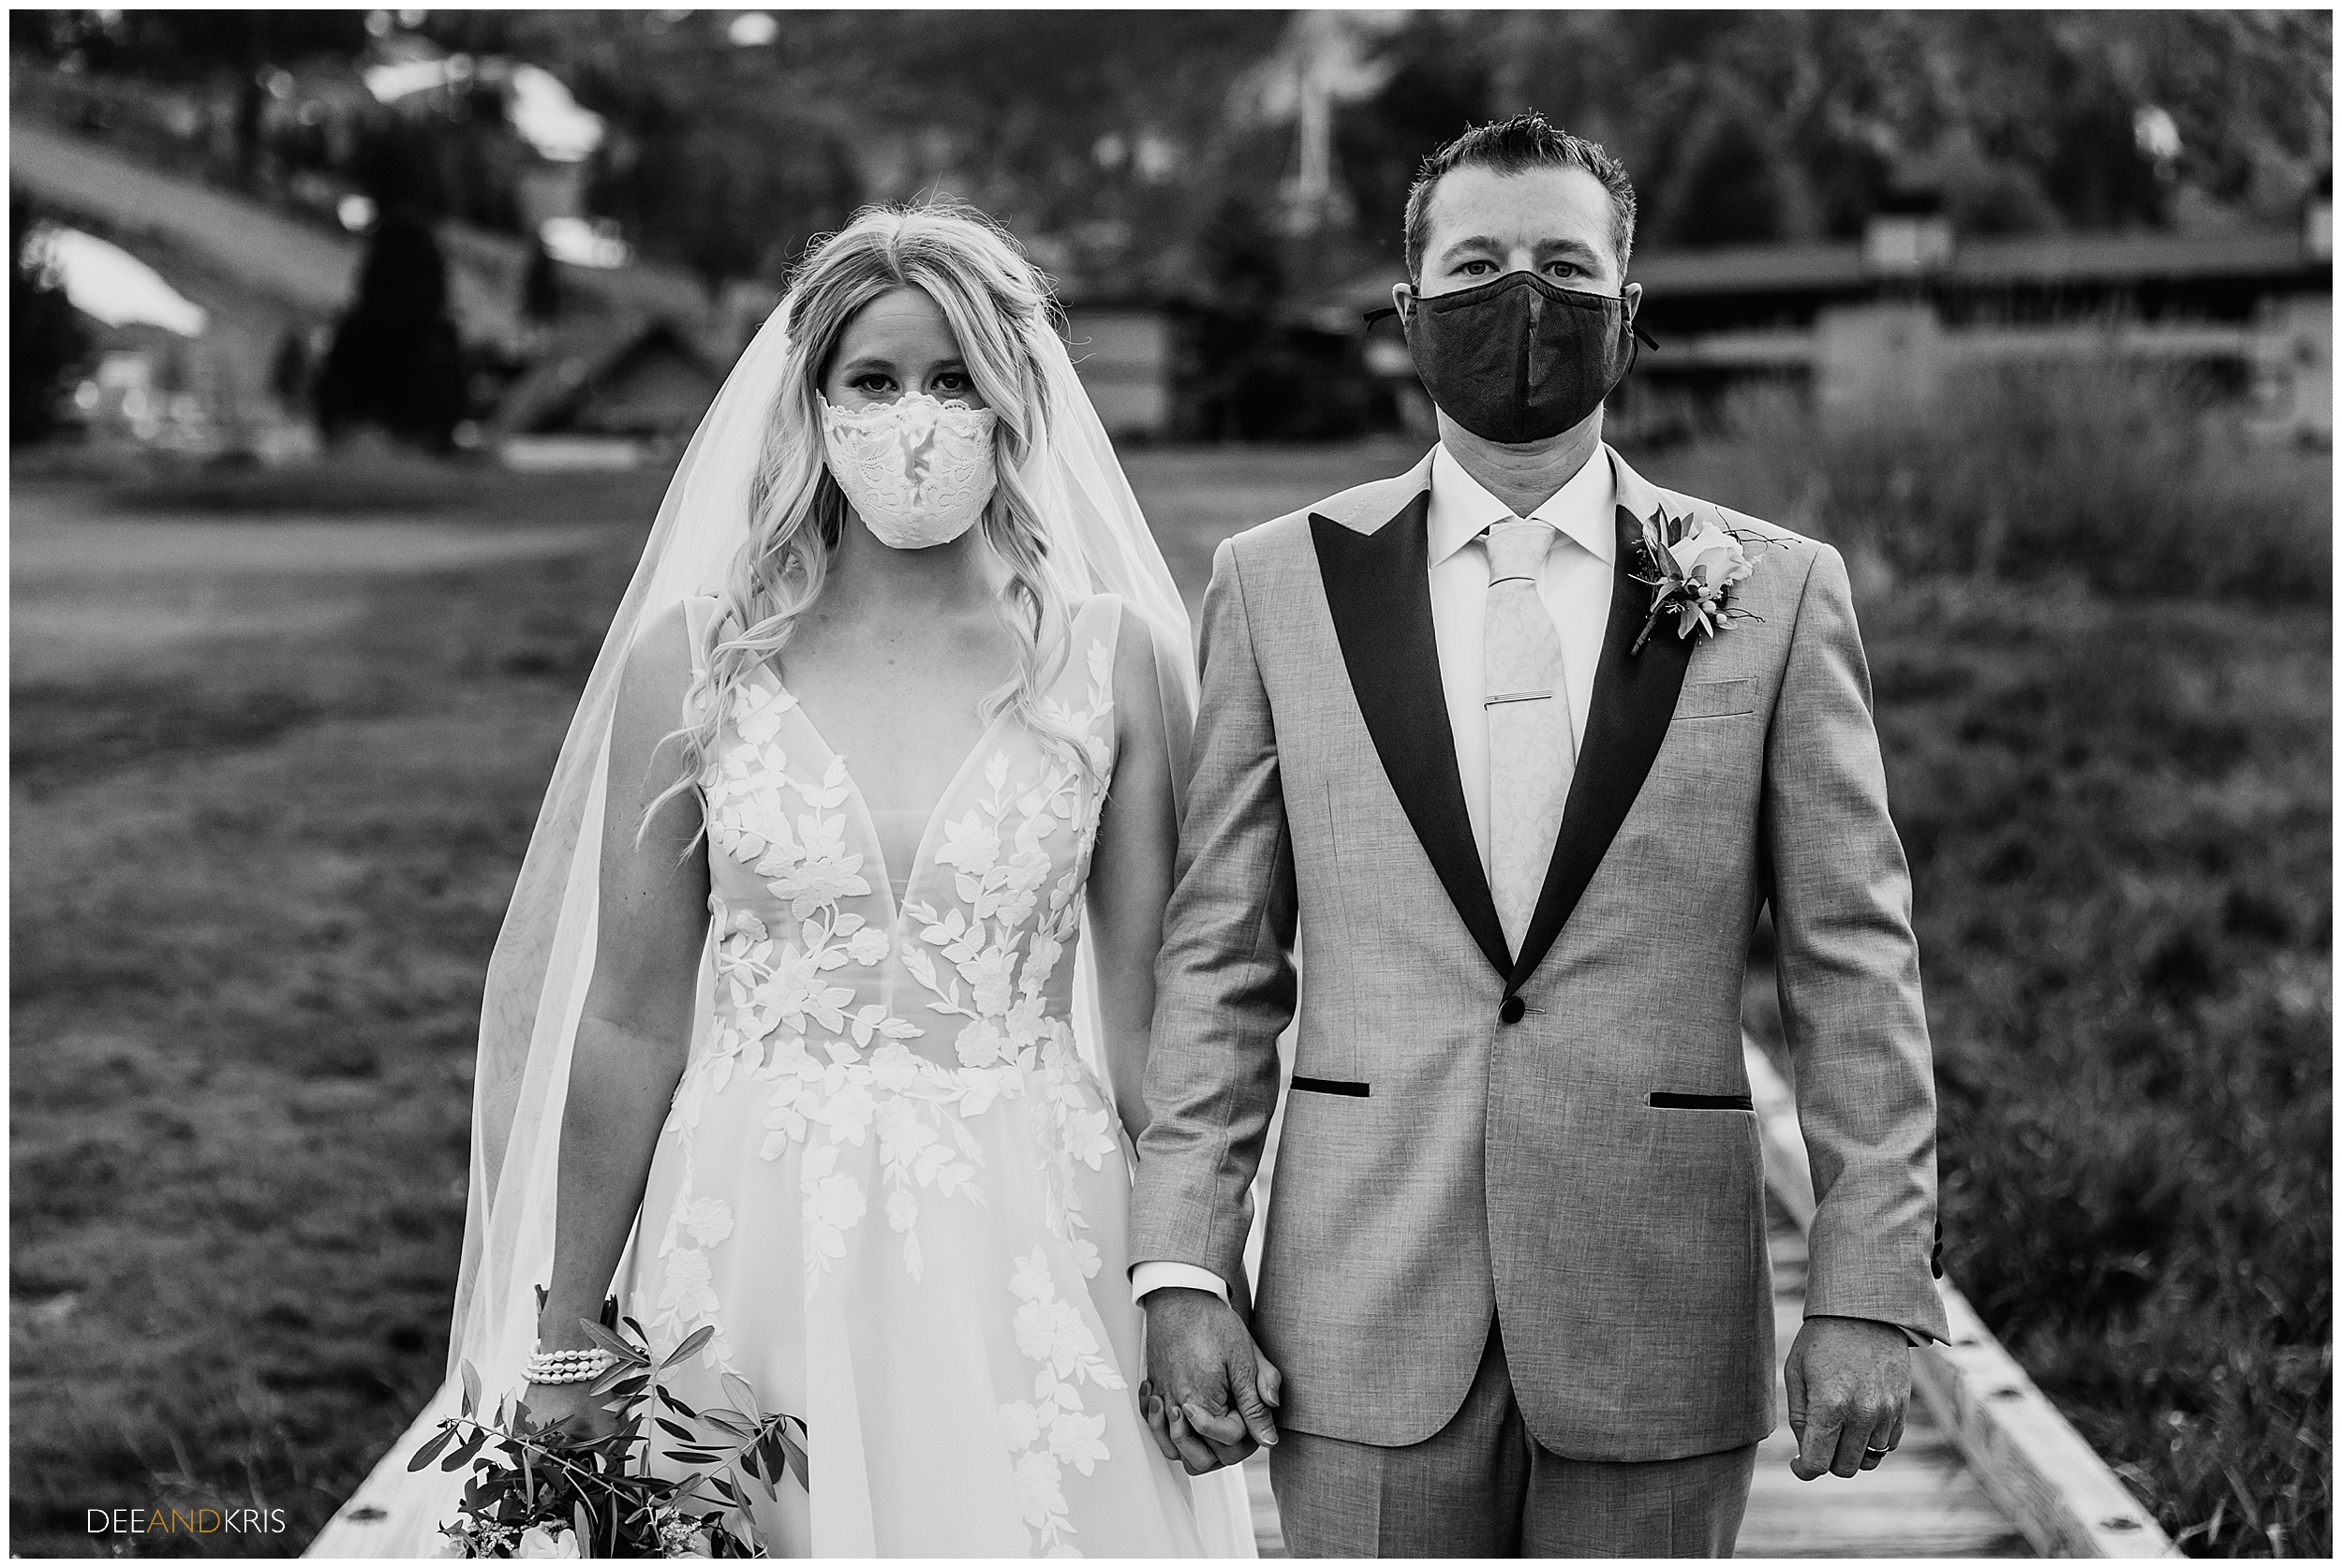 Corona Virus wedding pictures, Bridal Mask, covid-19 elopement